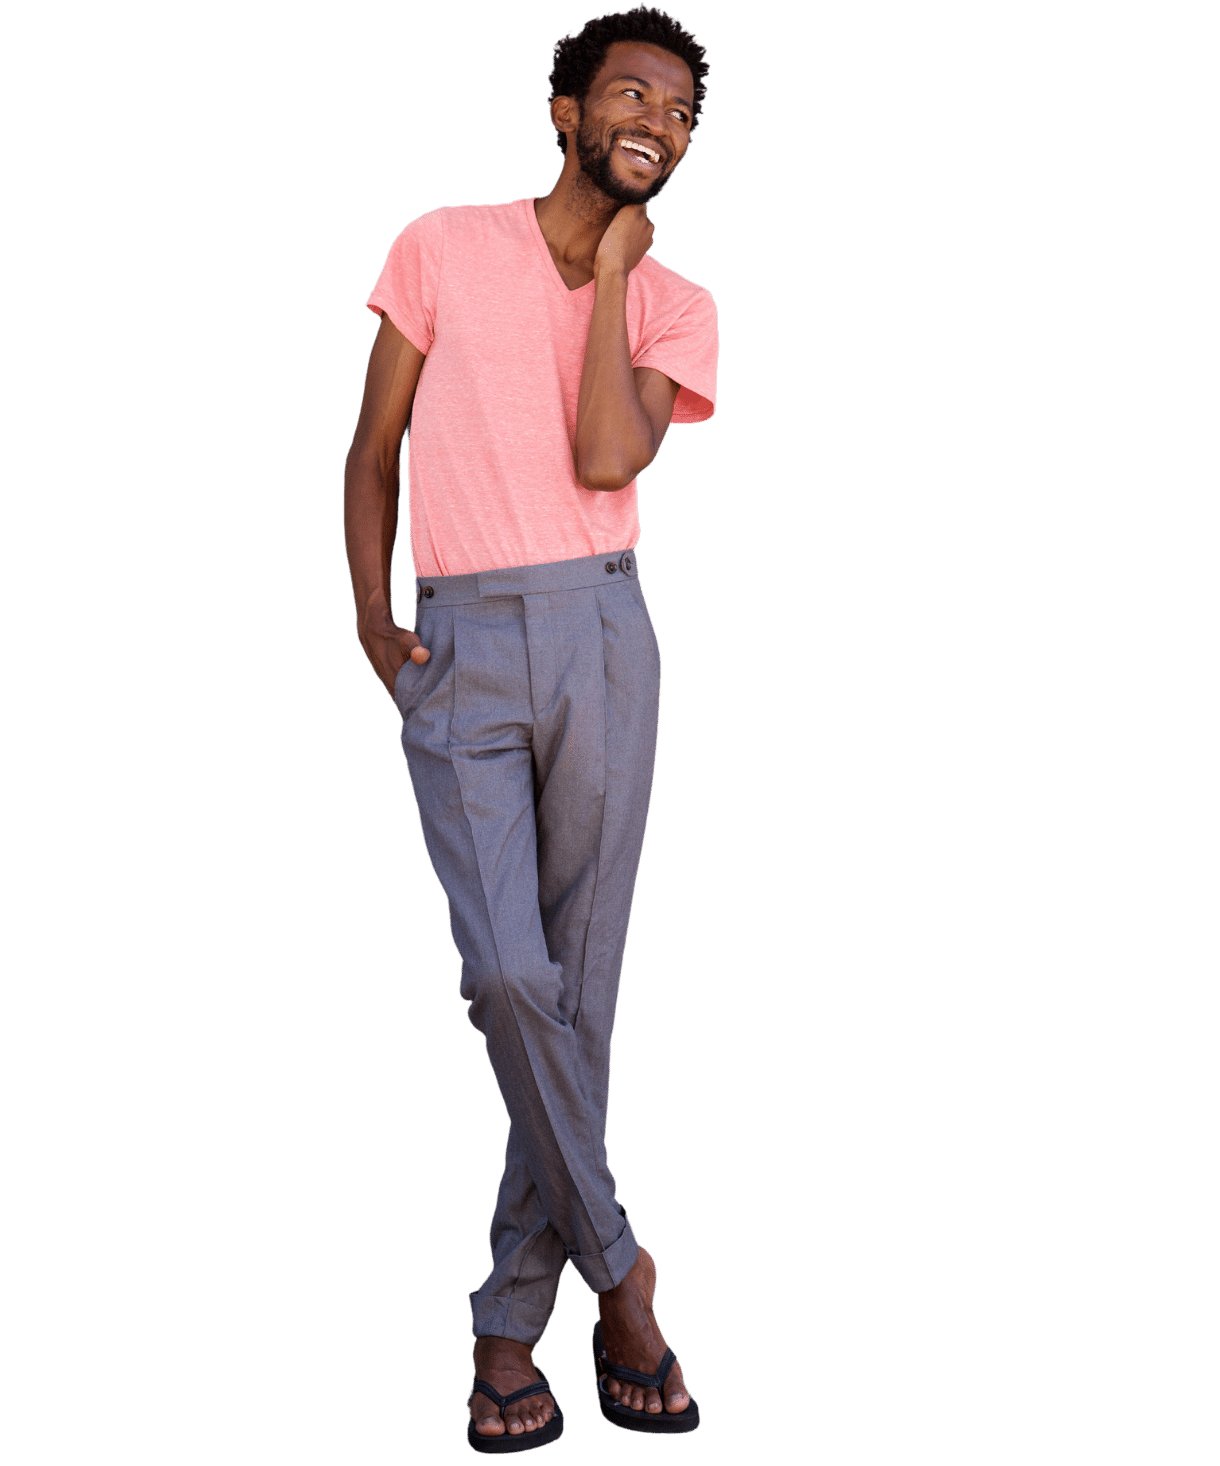 man in pink shirt and slacks leaning sideways